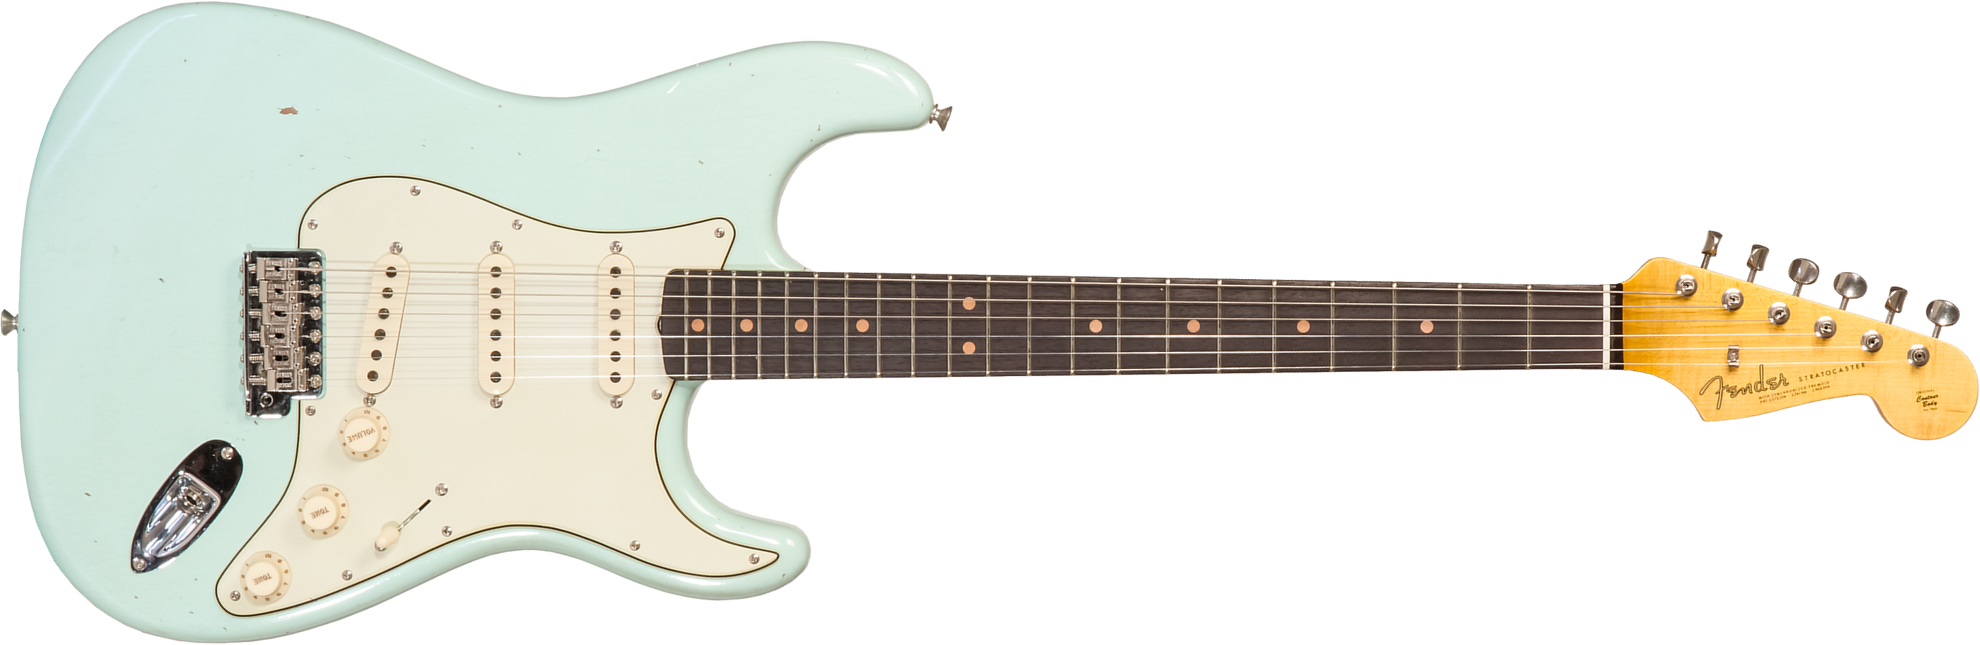 Fender Custom Shop Strat 1964 3s Trem Rw #cz570381 - Journeyman Relic Aged Surf Green - E-Gitarre in Str-Form - Main picture